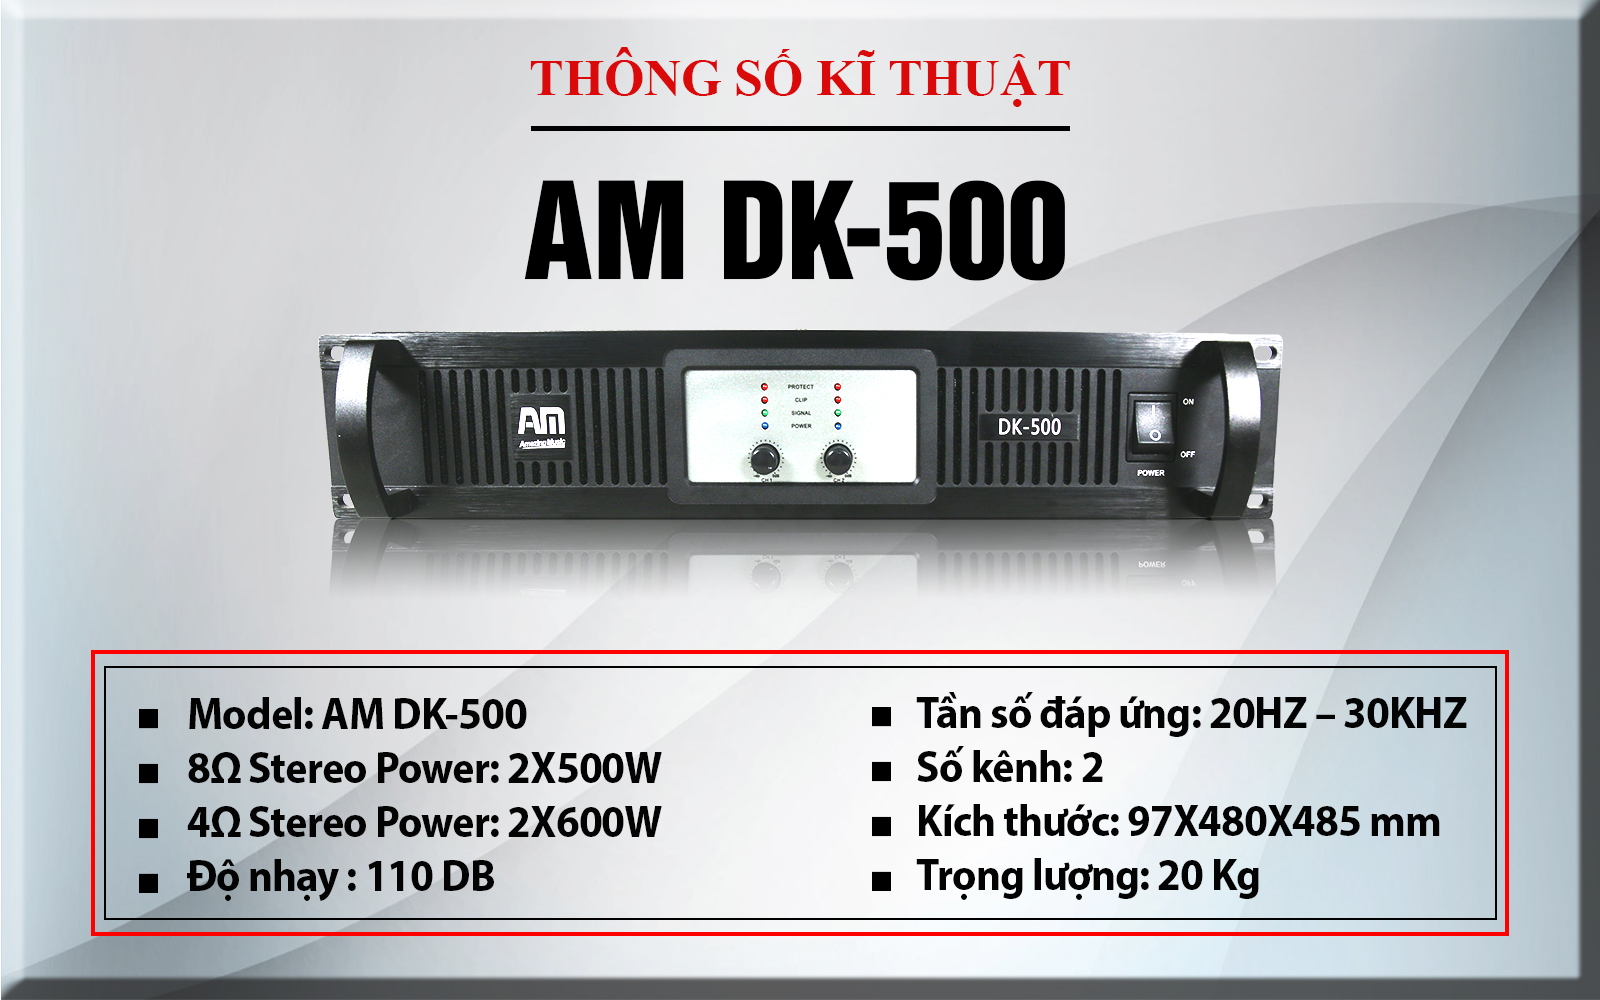 Cục đẩy AM DK-500